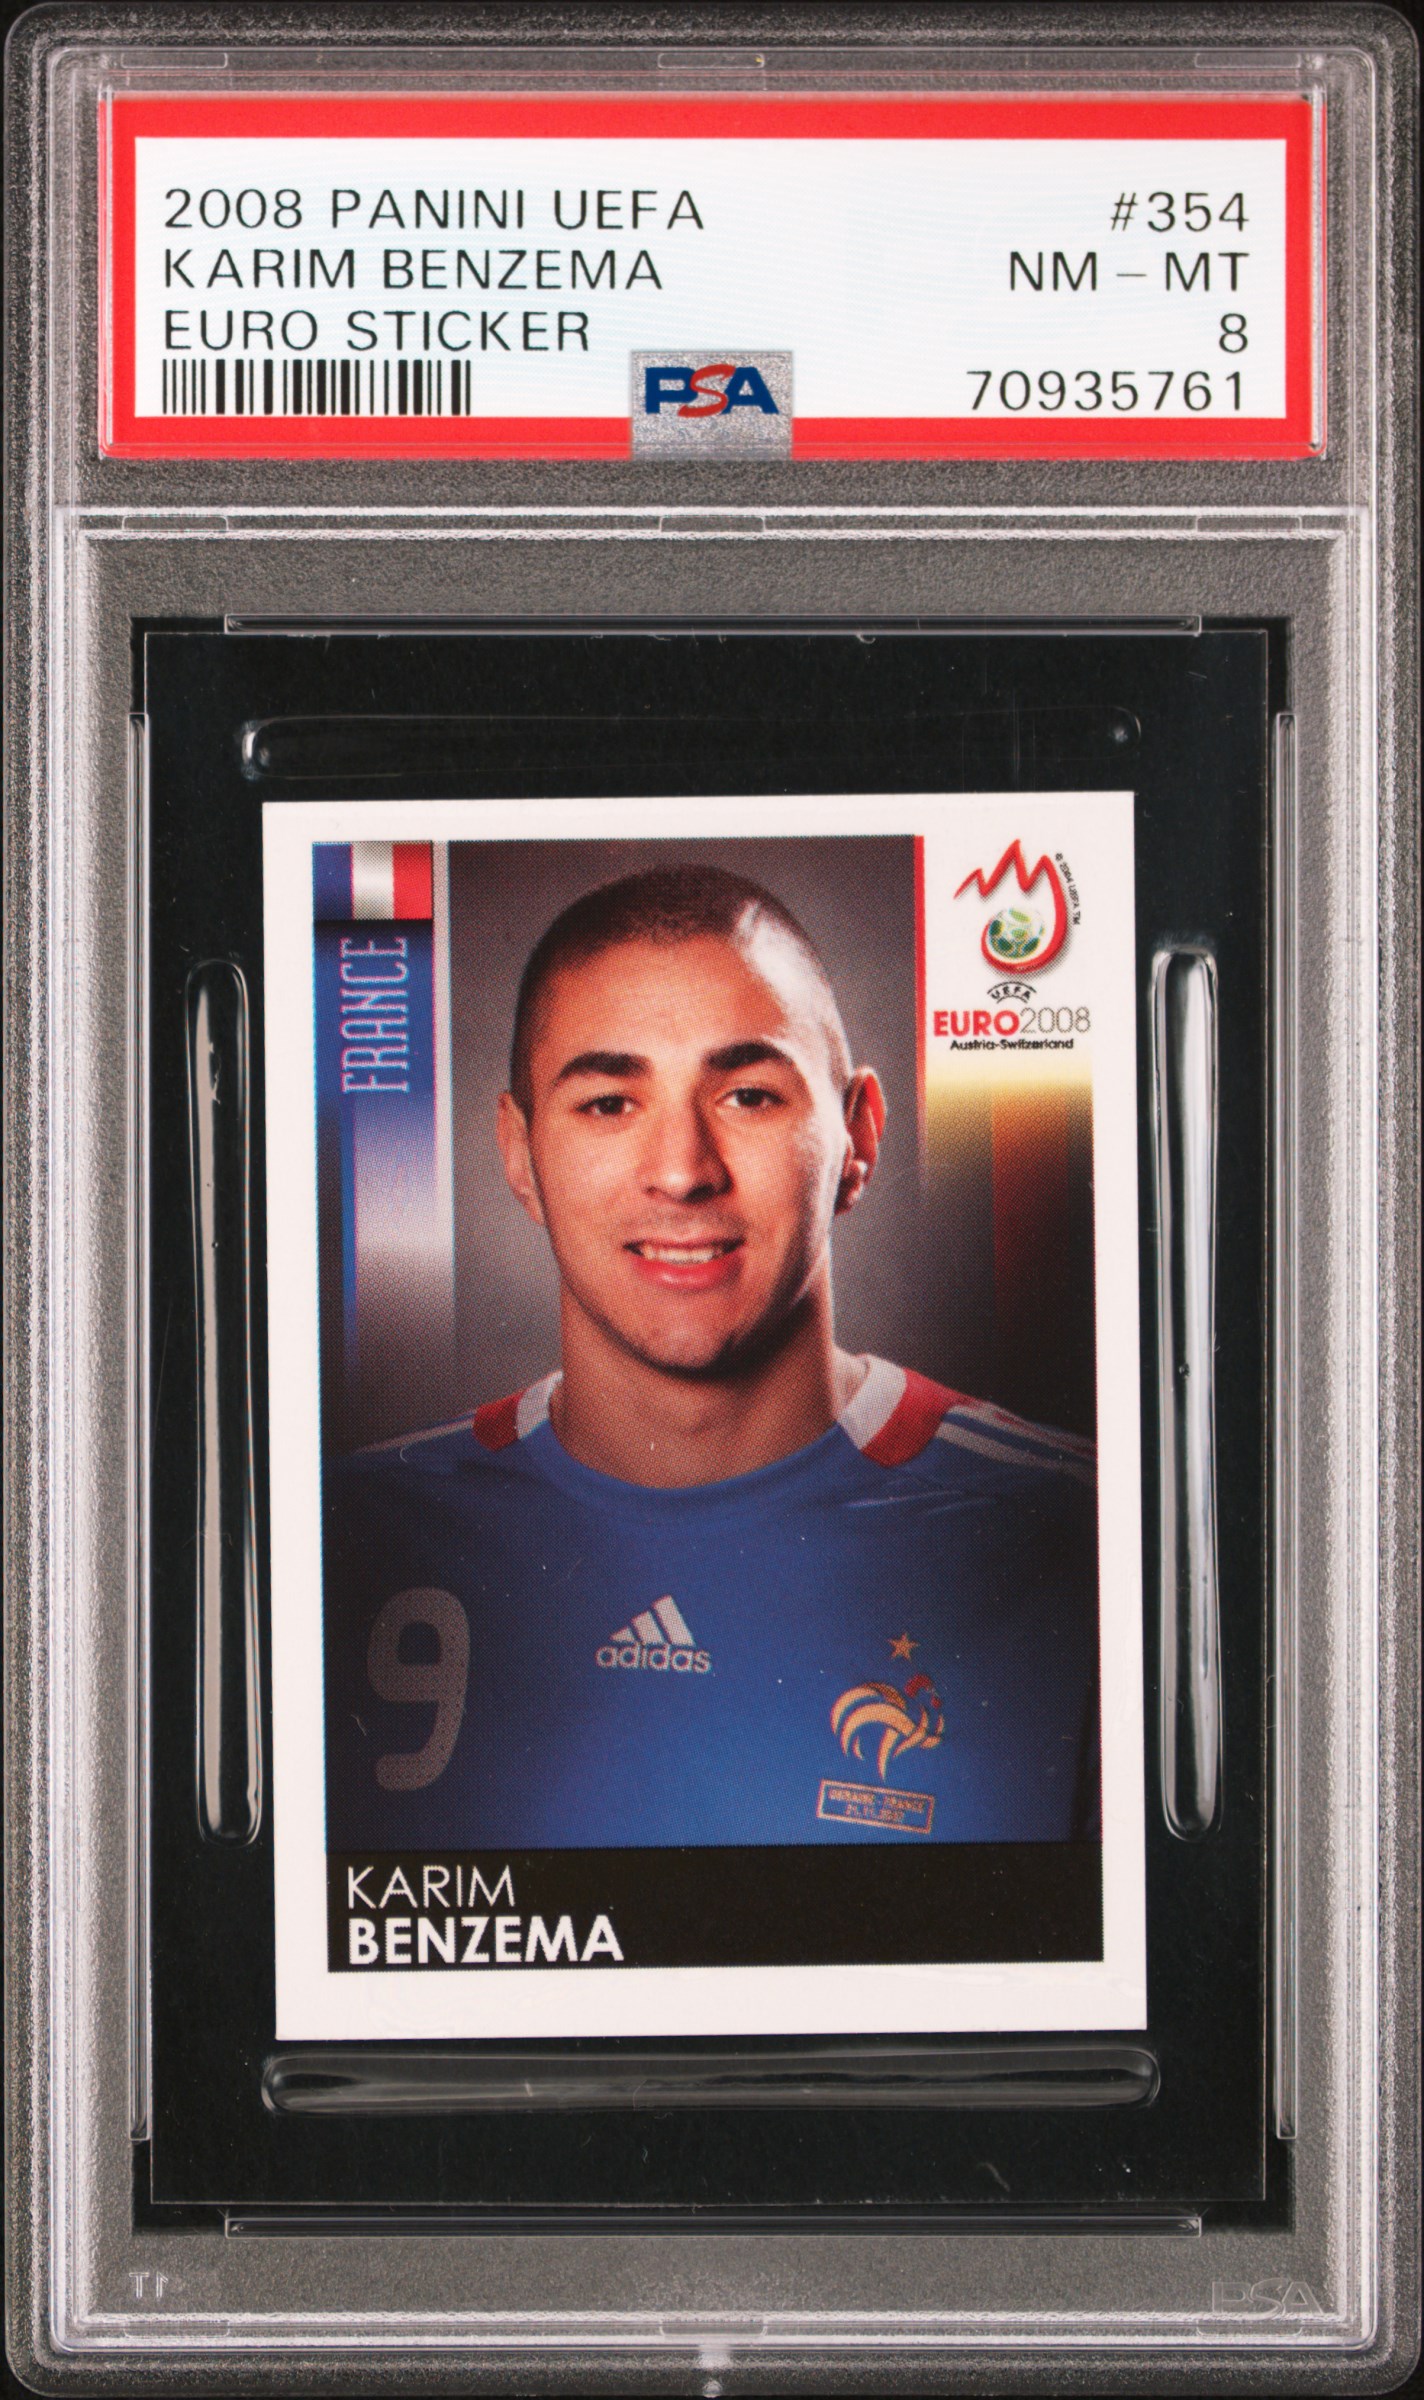 2008 Panini UEFA Euro Sticker #354 Karim Benzema – PSA NM-MT 8